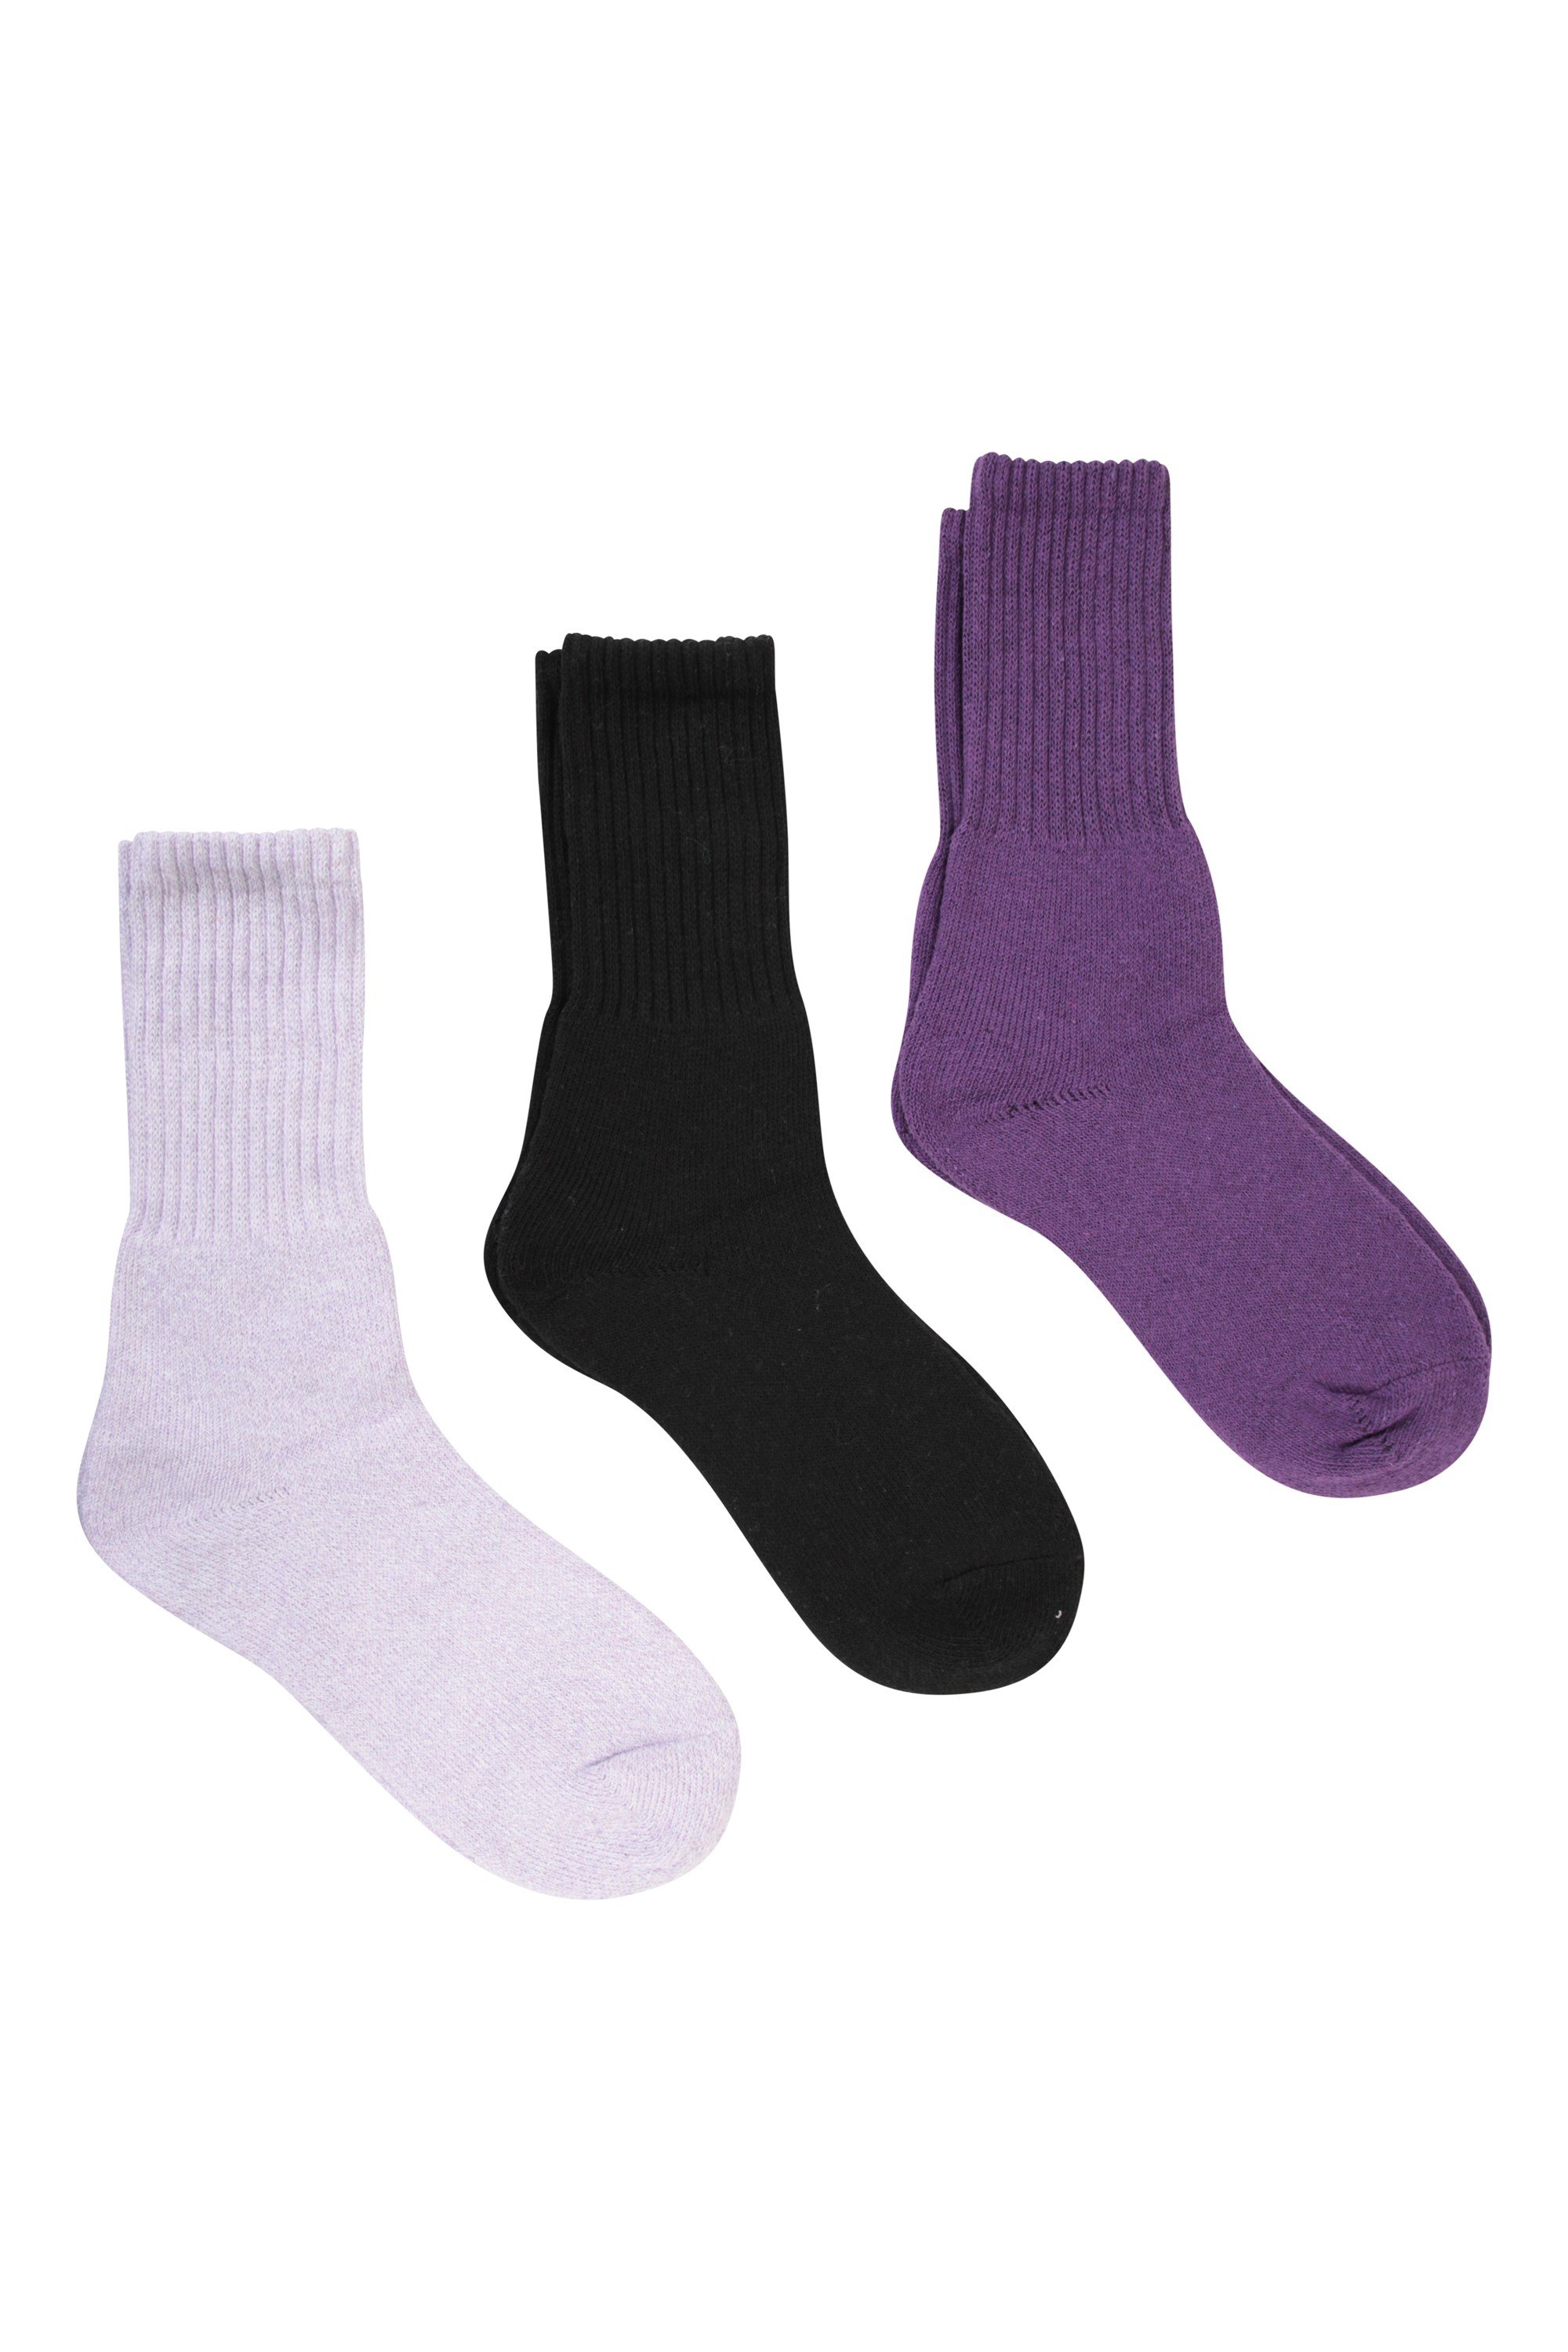 Outdoor Socks - 3 Pack - Light Purple